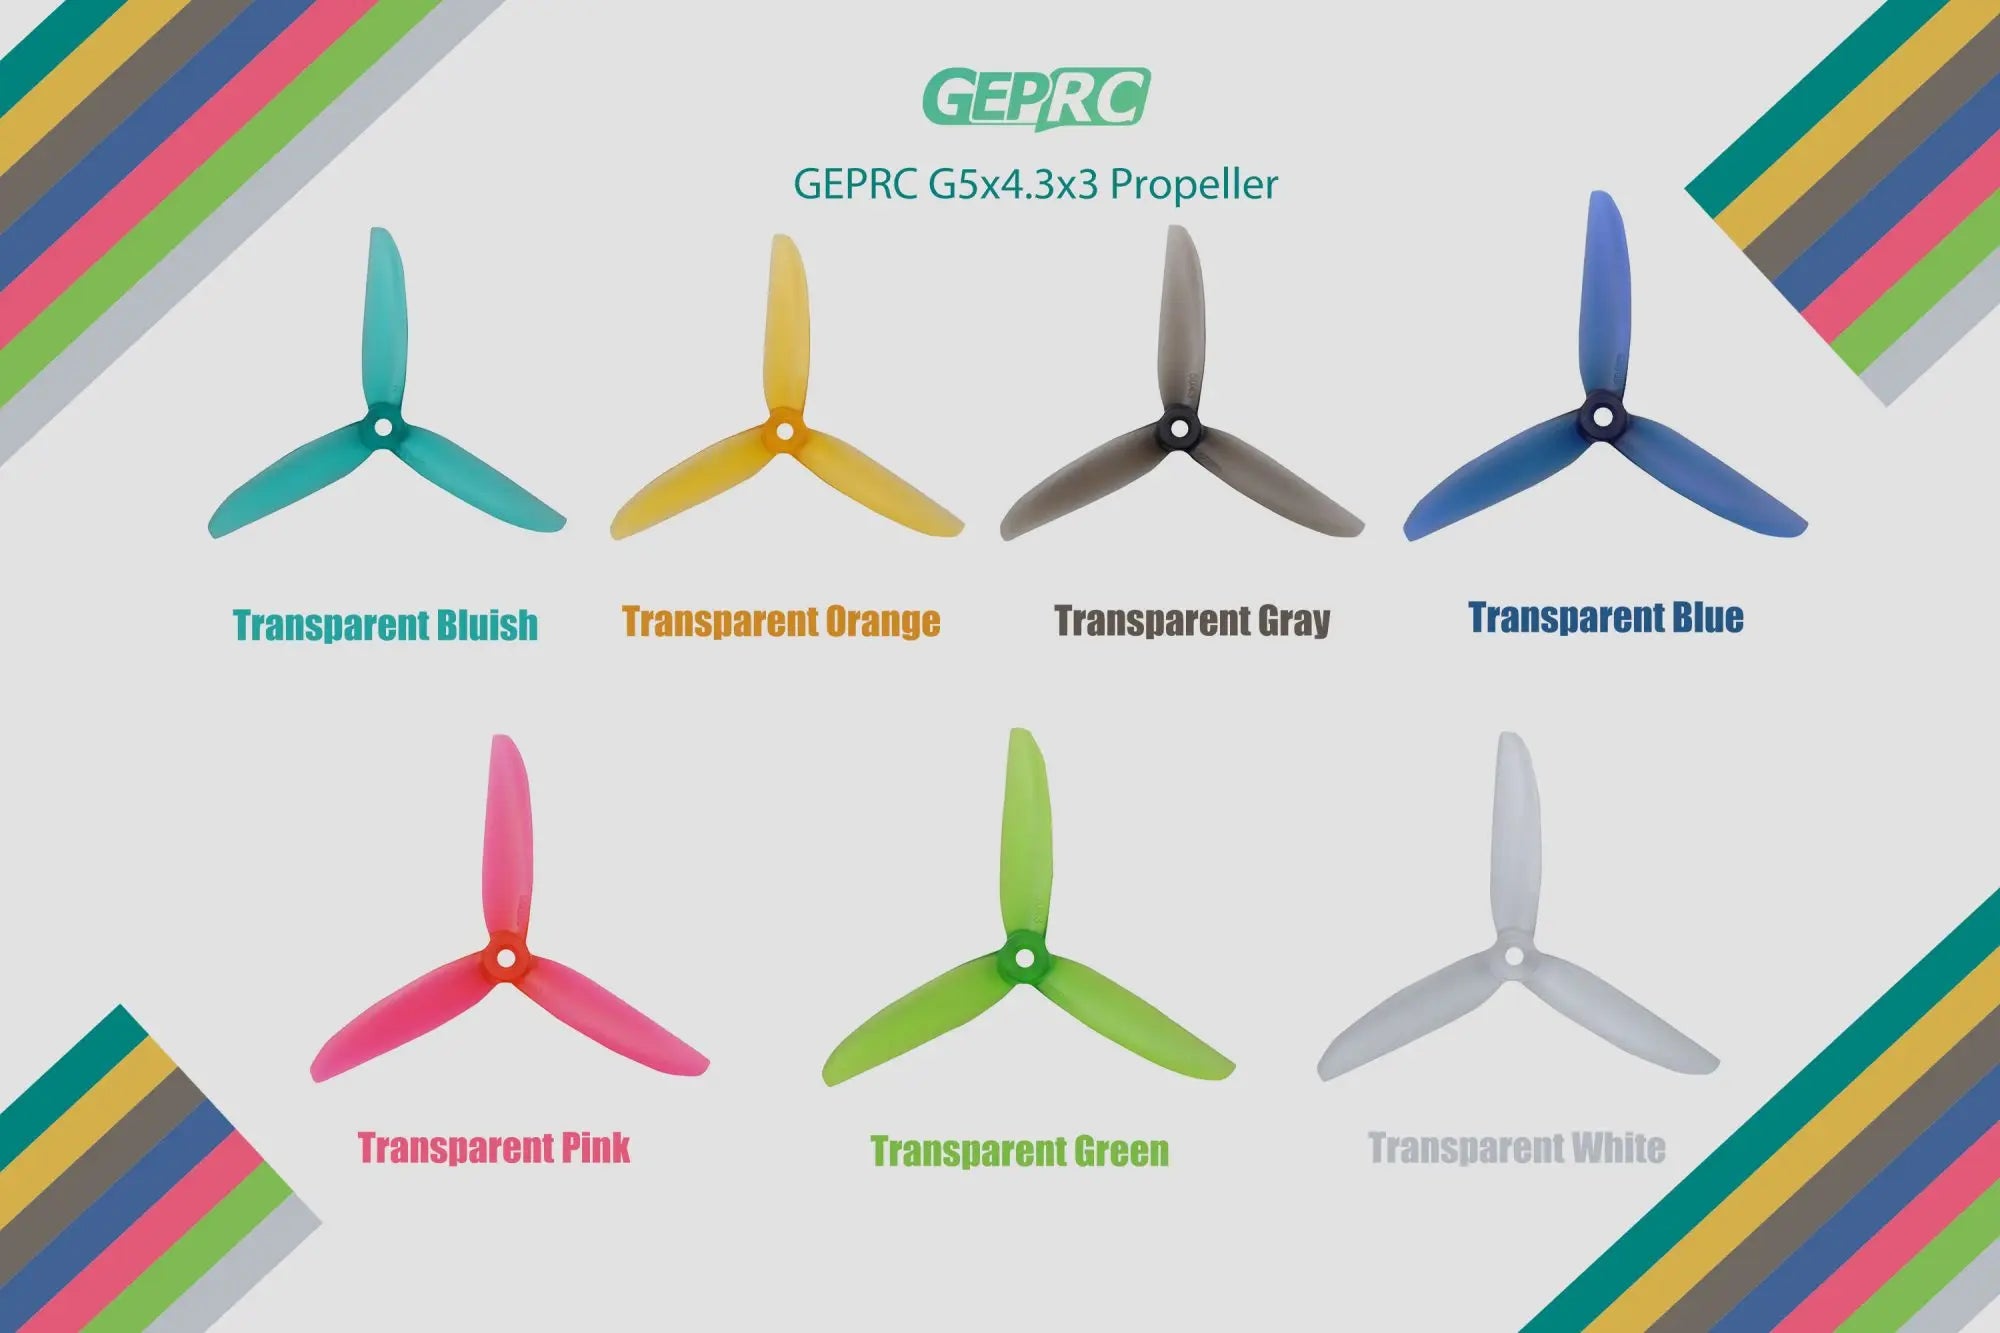 GEPRC G5x4.3×3 Propeller, GEPRC G5x4.3x3 Propeller Transparent Bluish Transparent Orange Trans